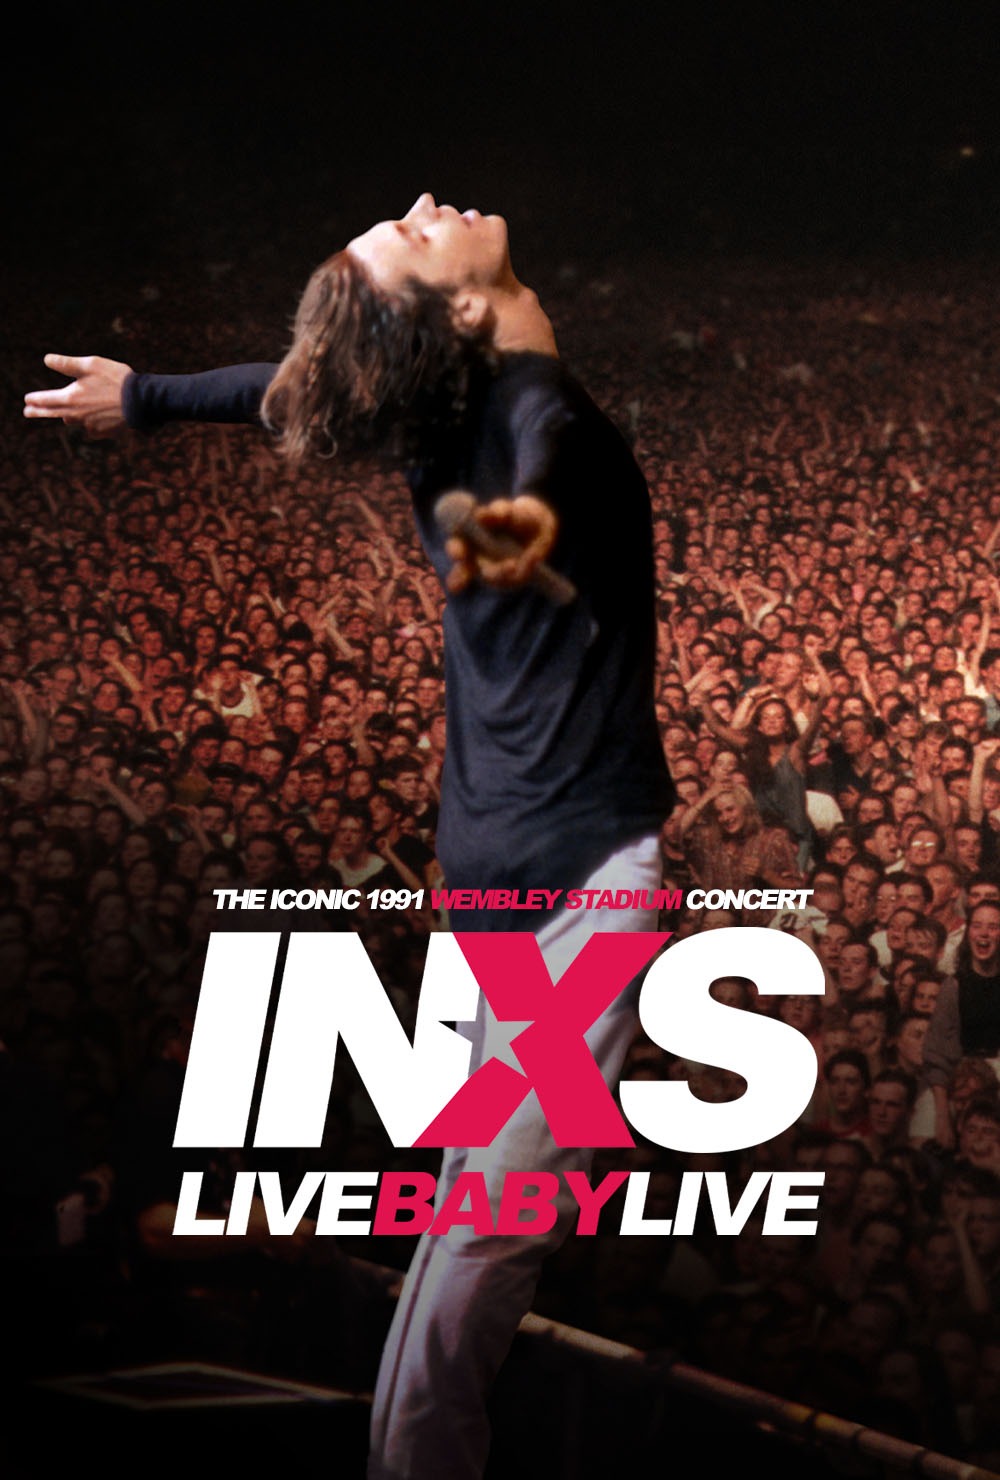 INXS: Live Baby Live at Wembly Stadium